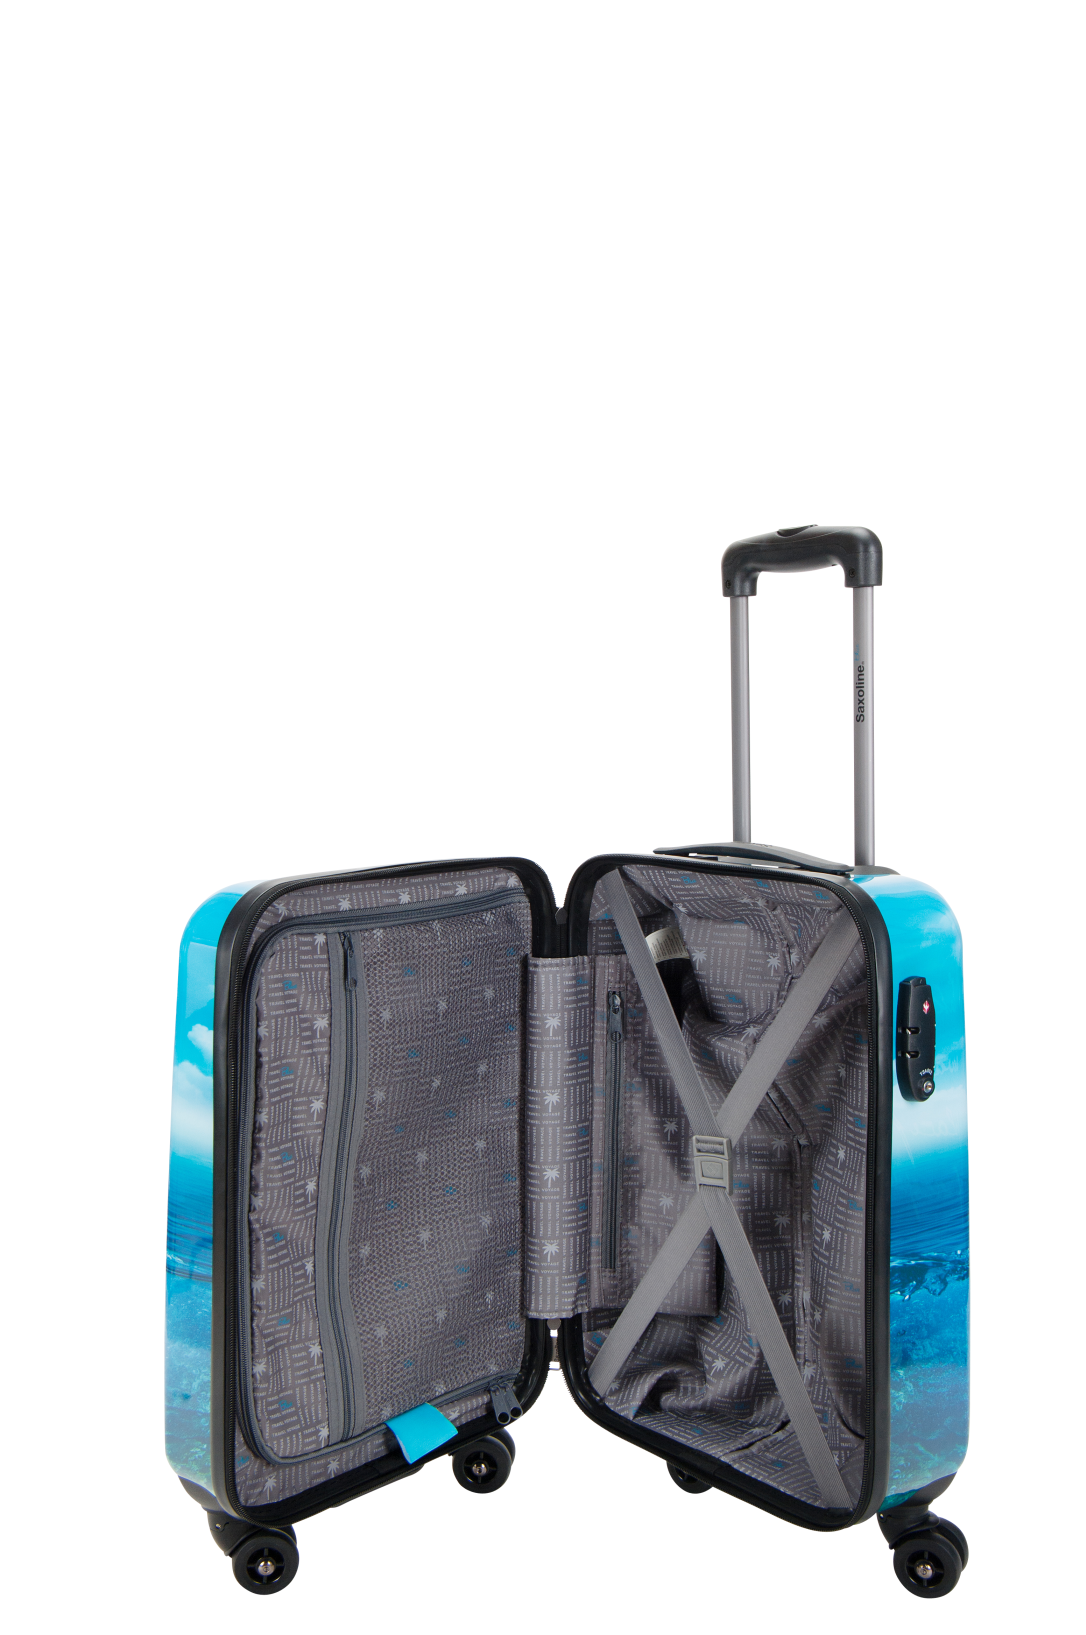 Saxoline Blue S - Binnenkant Island Print hard reiskoffer | luggage4u.be